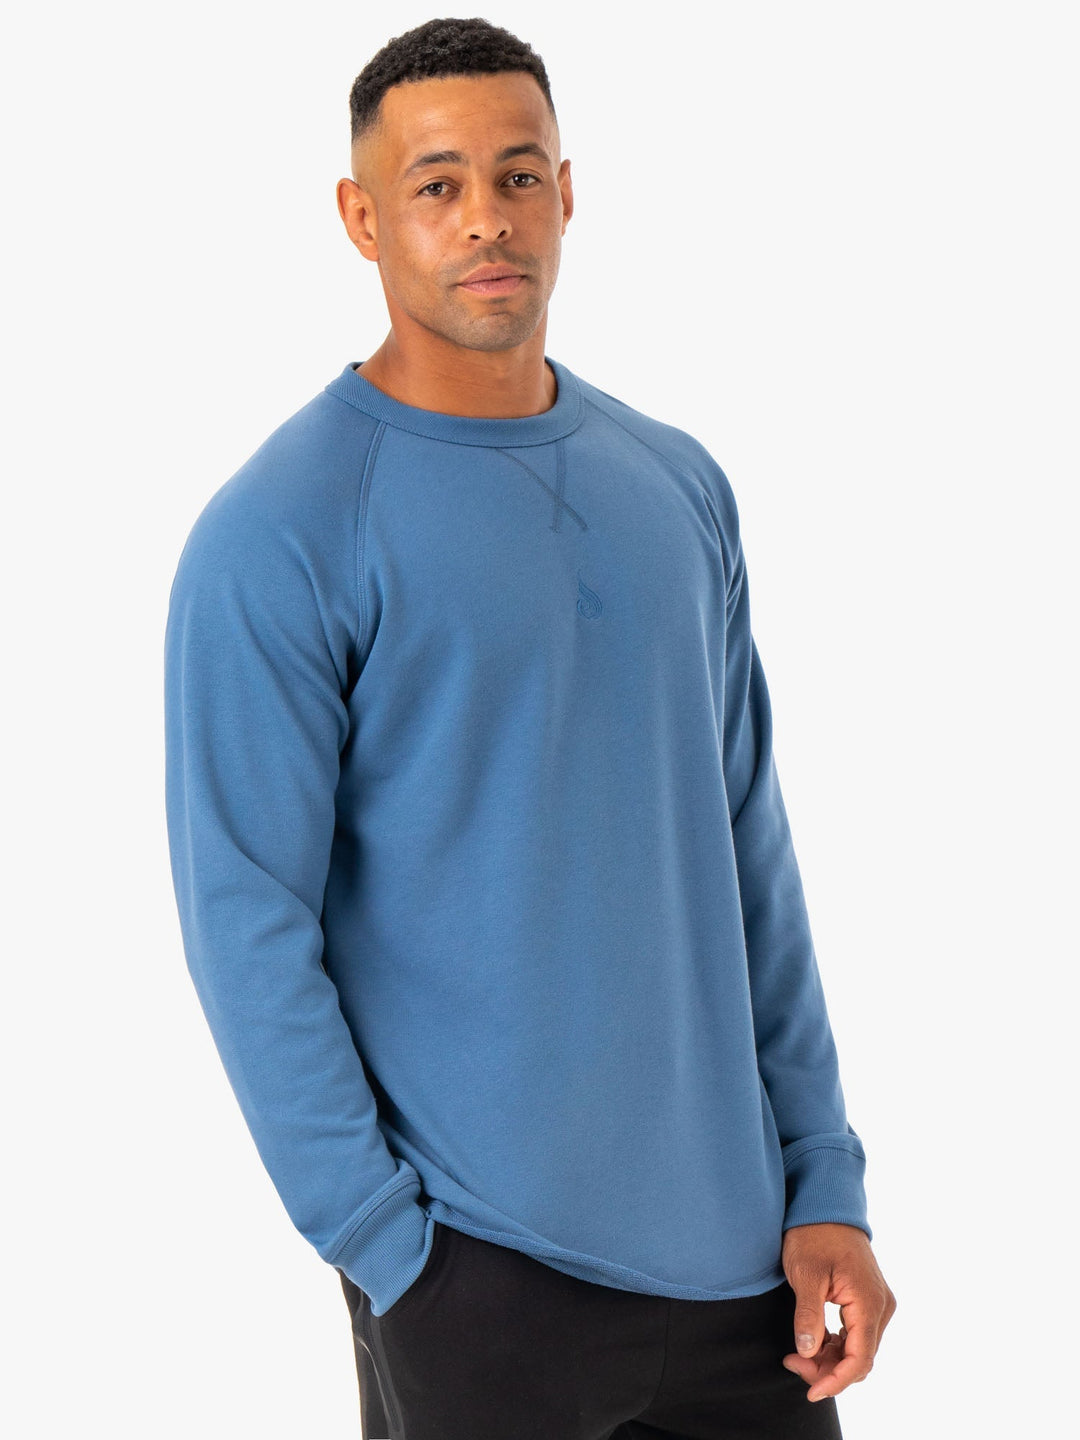 Restore Crew Neck - Blue Clothing Ryderwear 